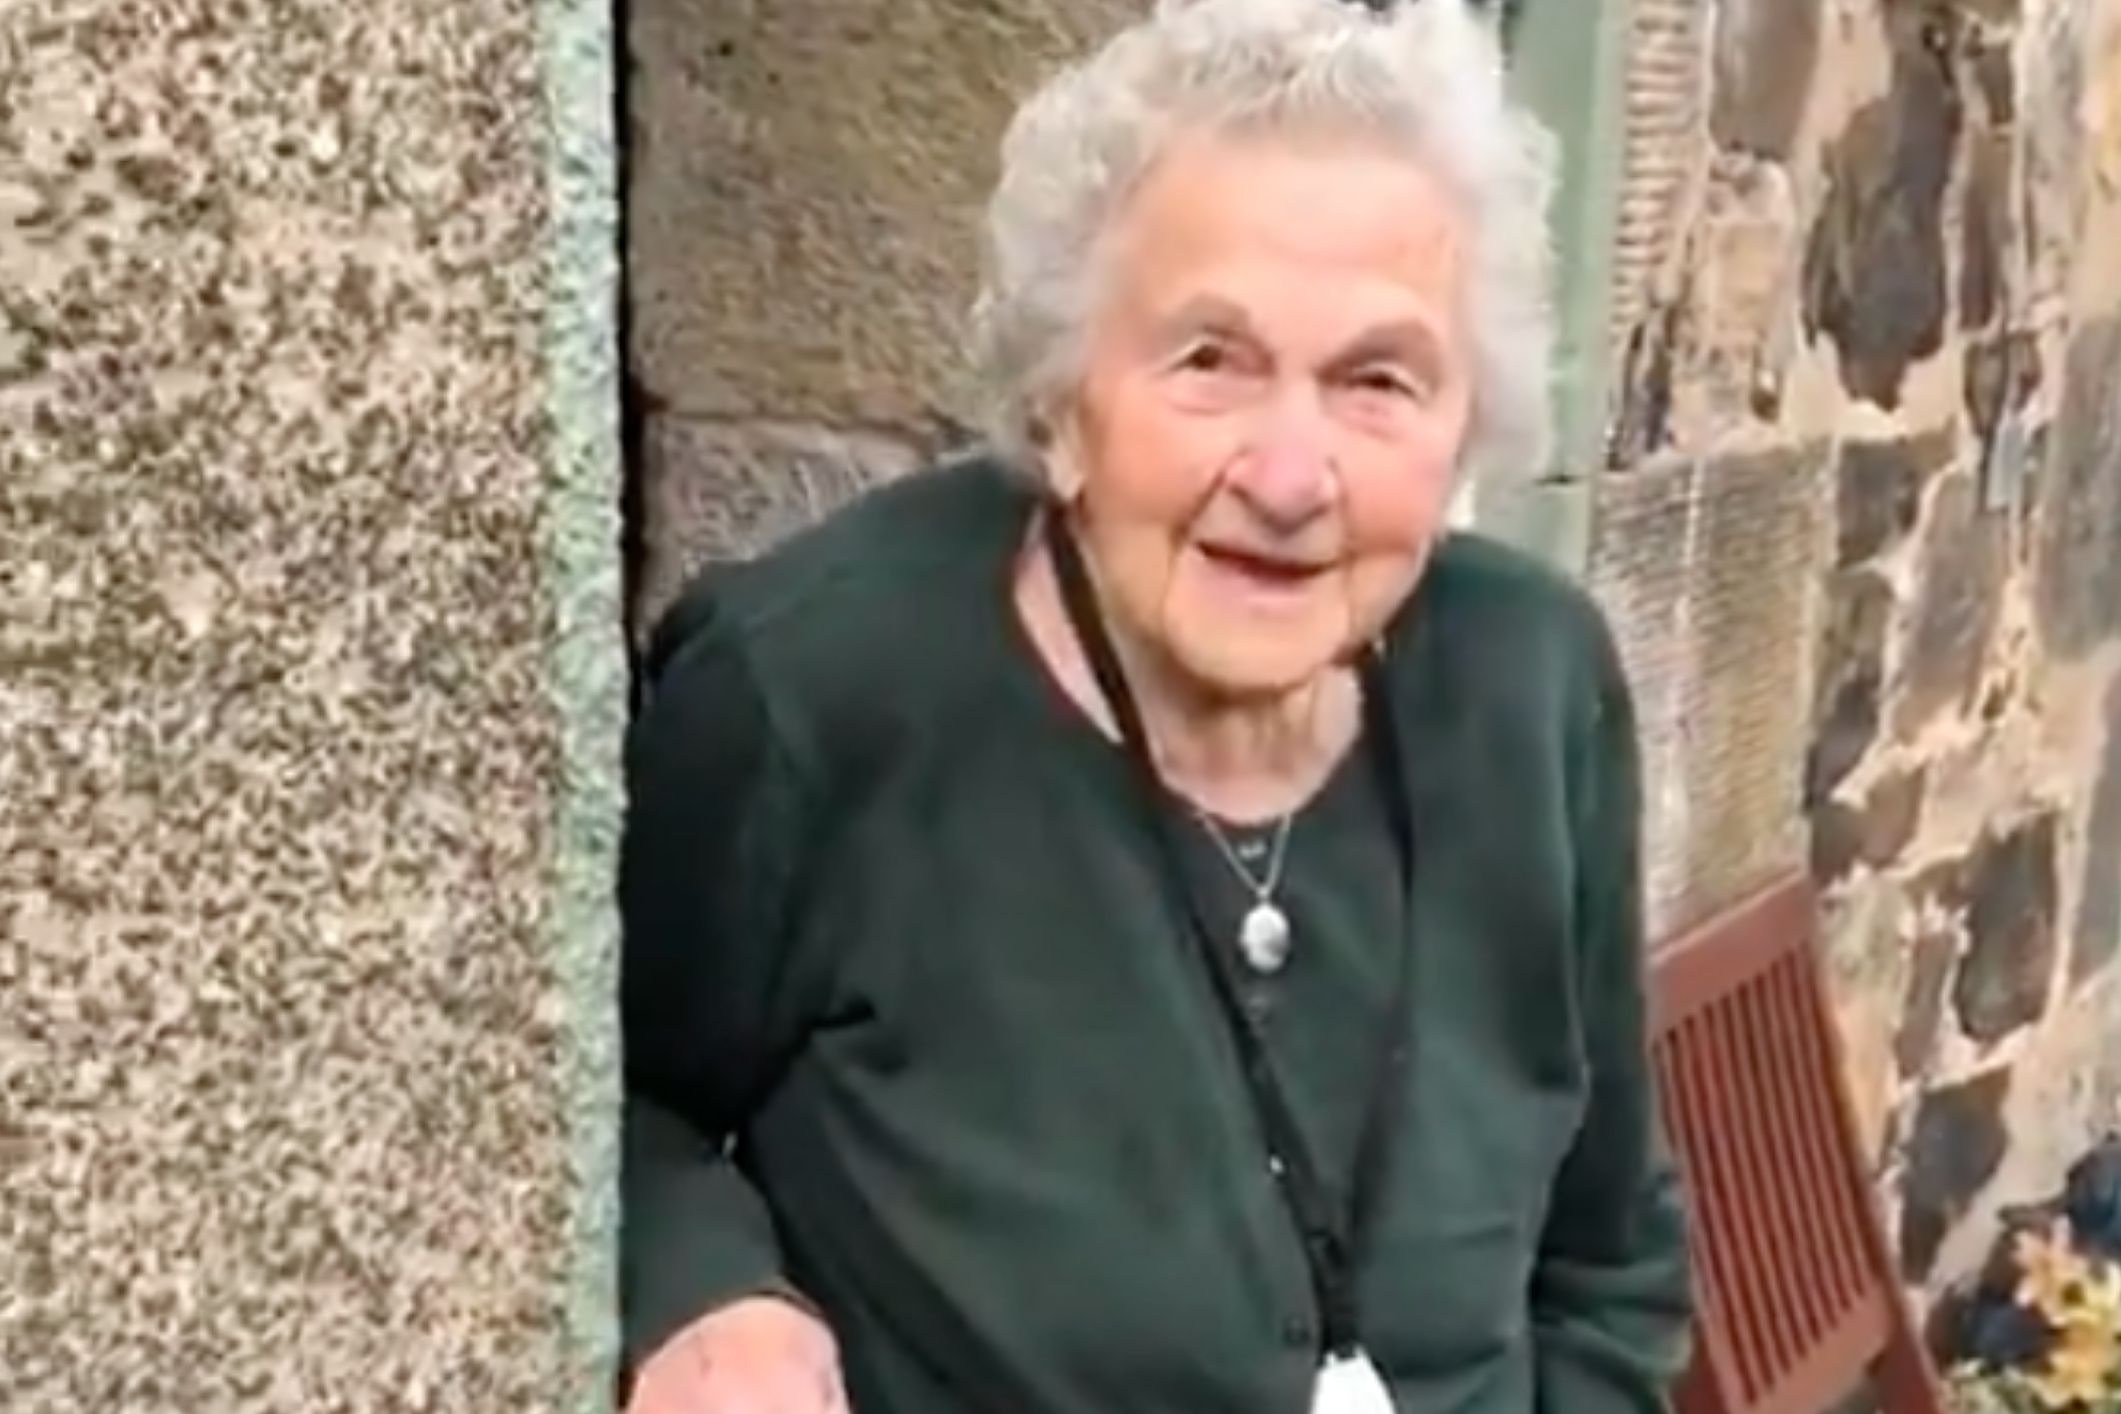 Sweet grandma goes viral